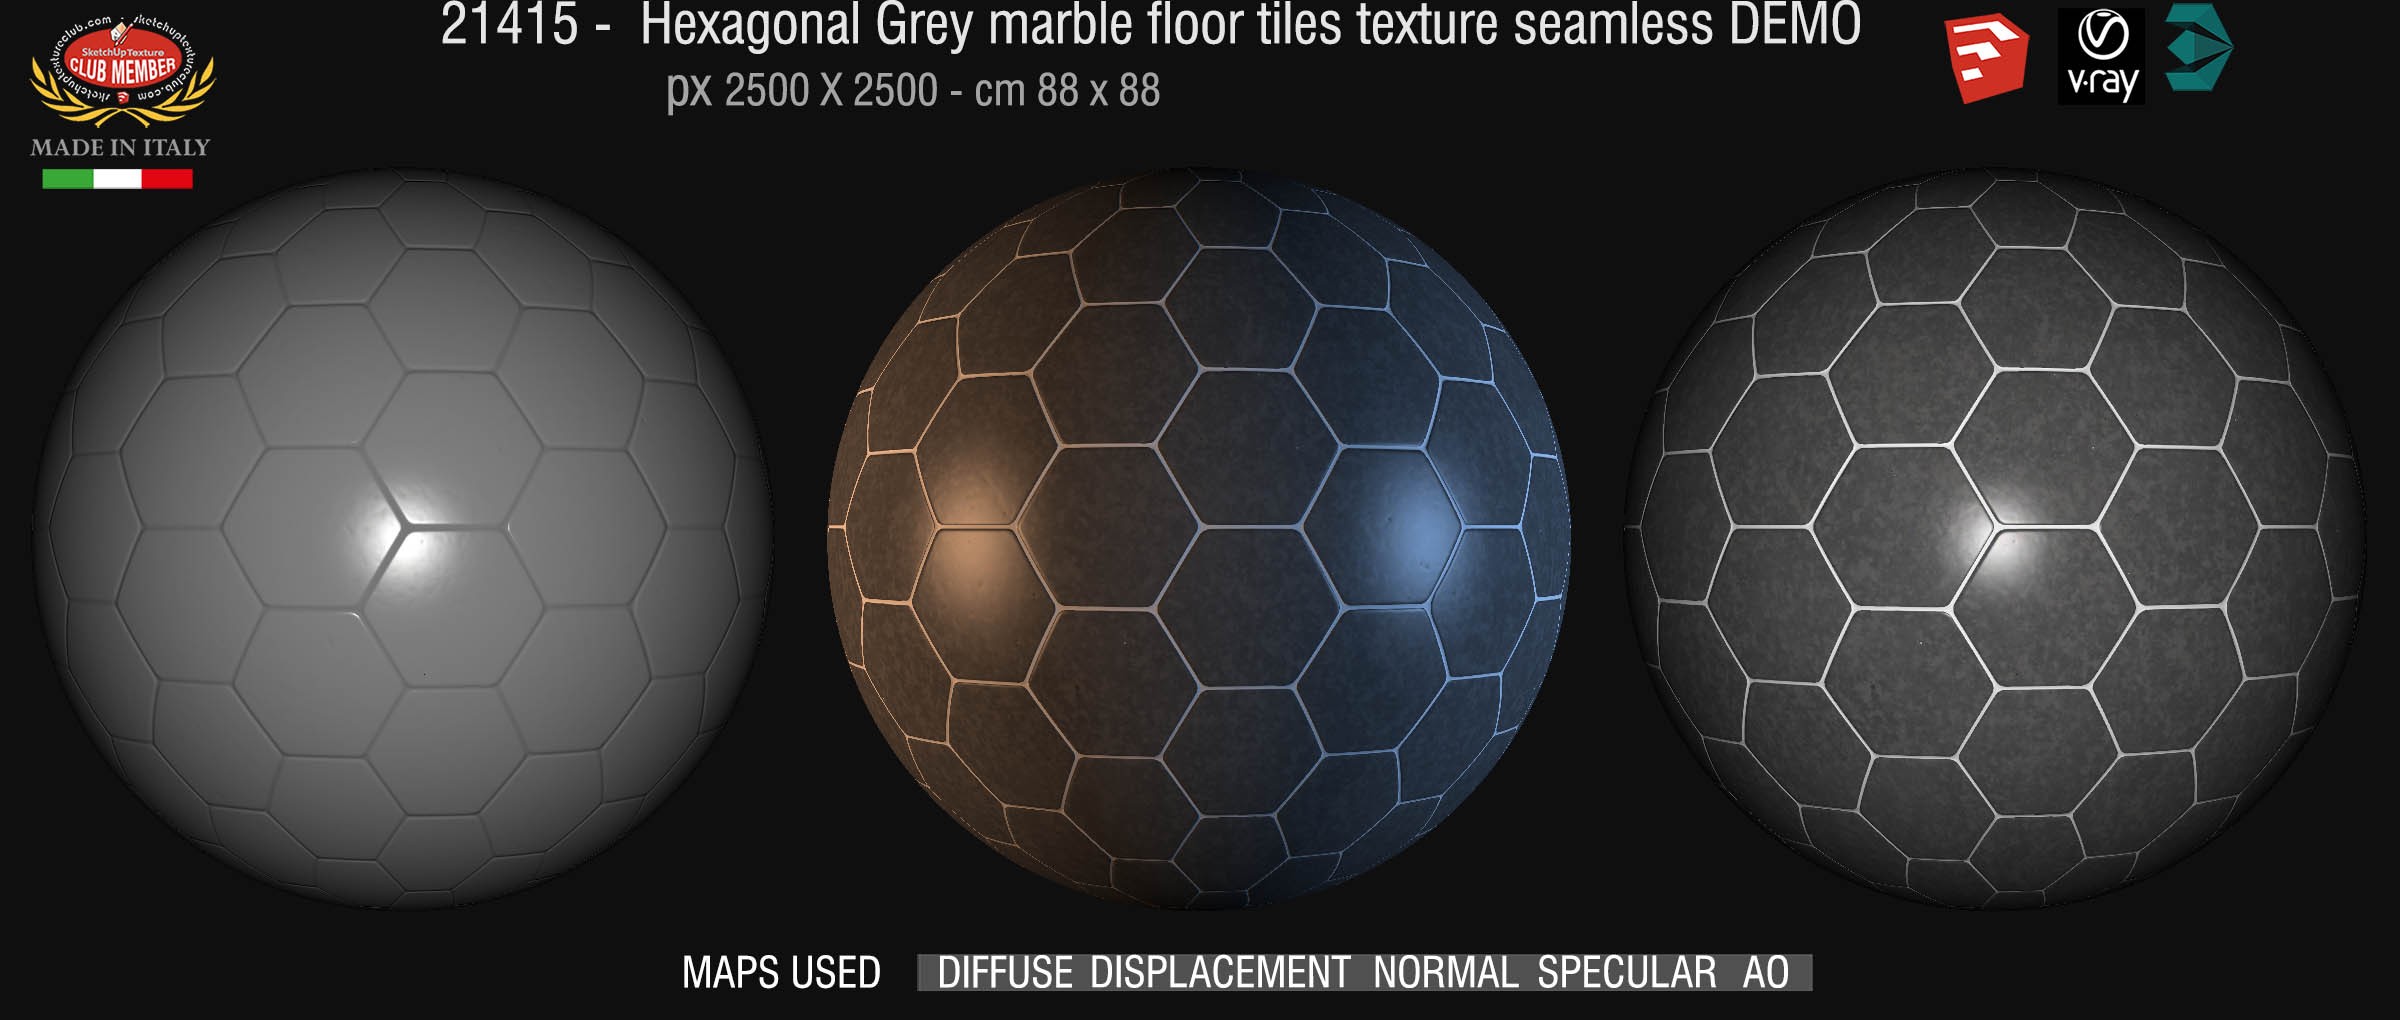 21415 hexagonal grey marble tile texture seamless + maps DEMO